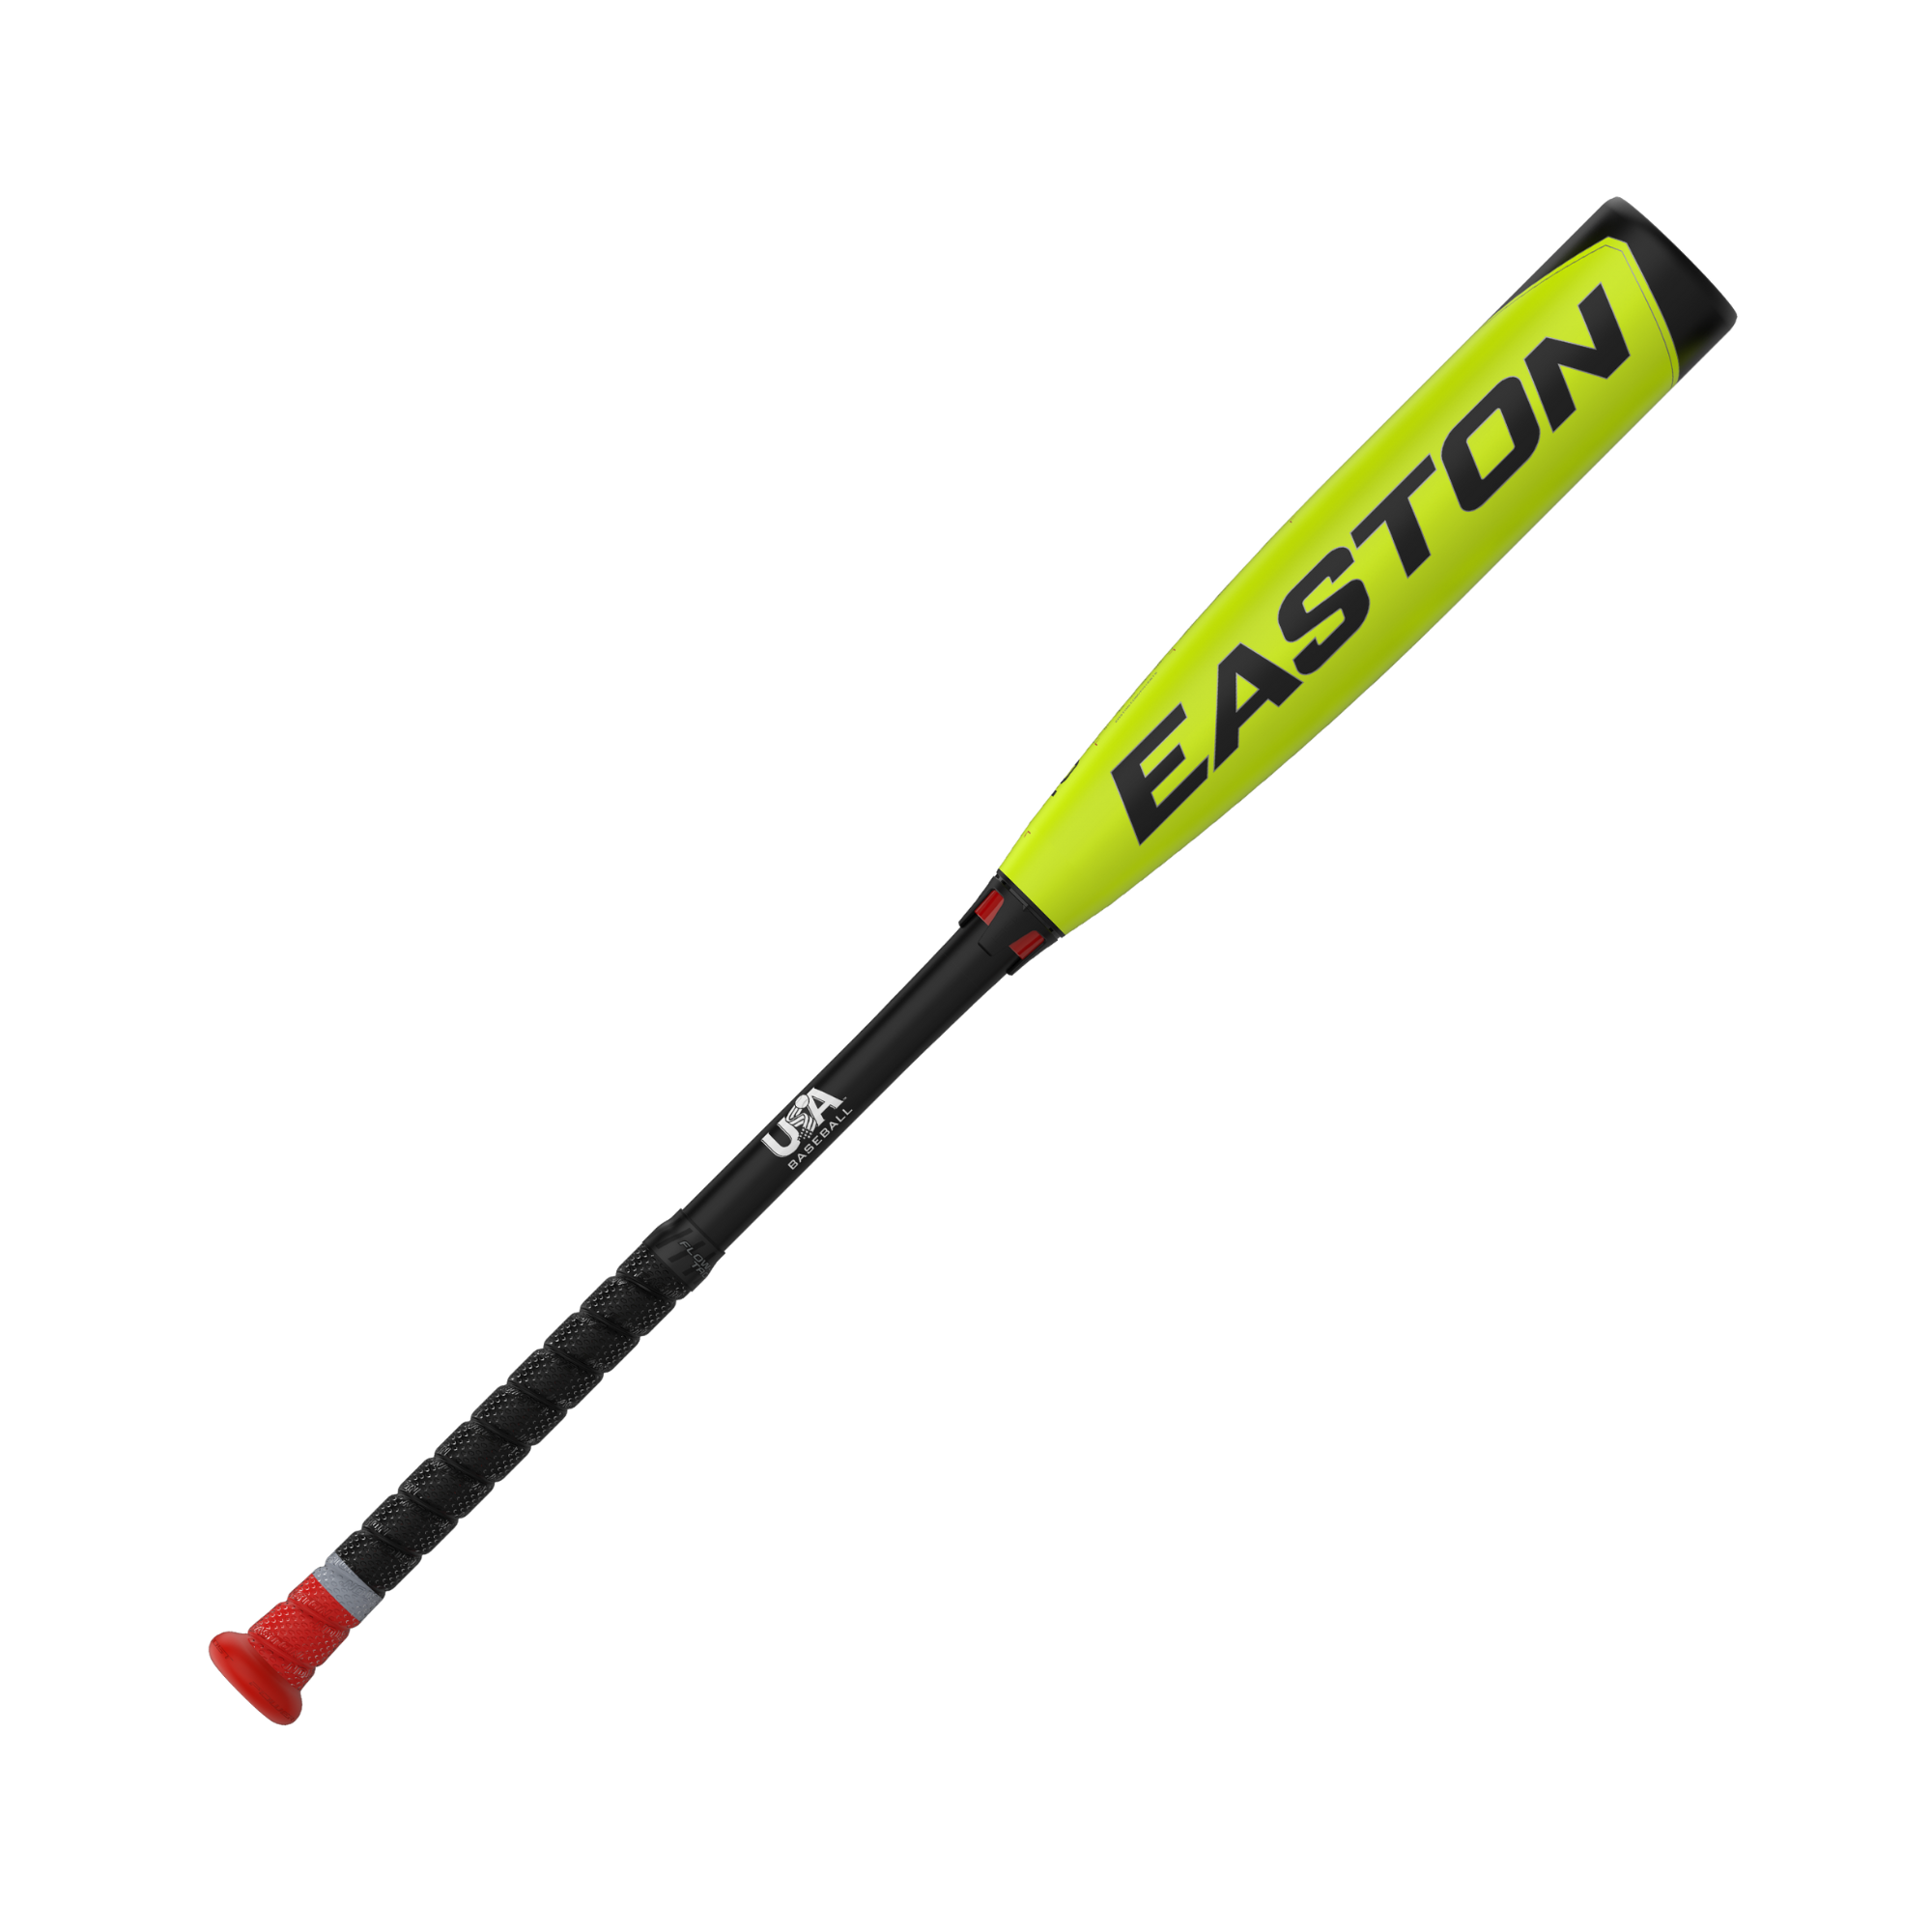 Easton Adv 360 -5 (2 5/8" Barrel) USA Youth Baseball Bat